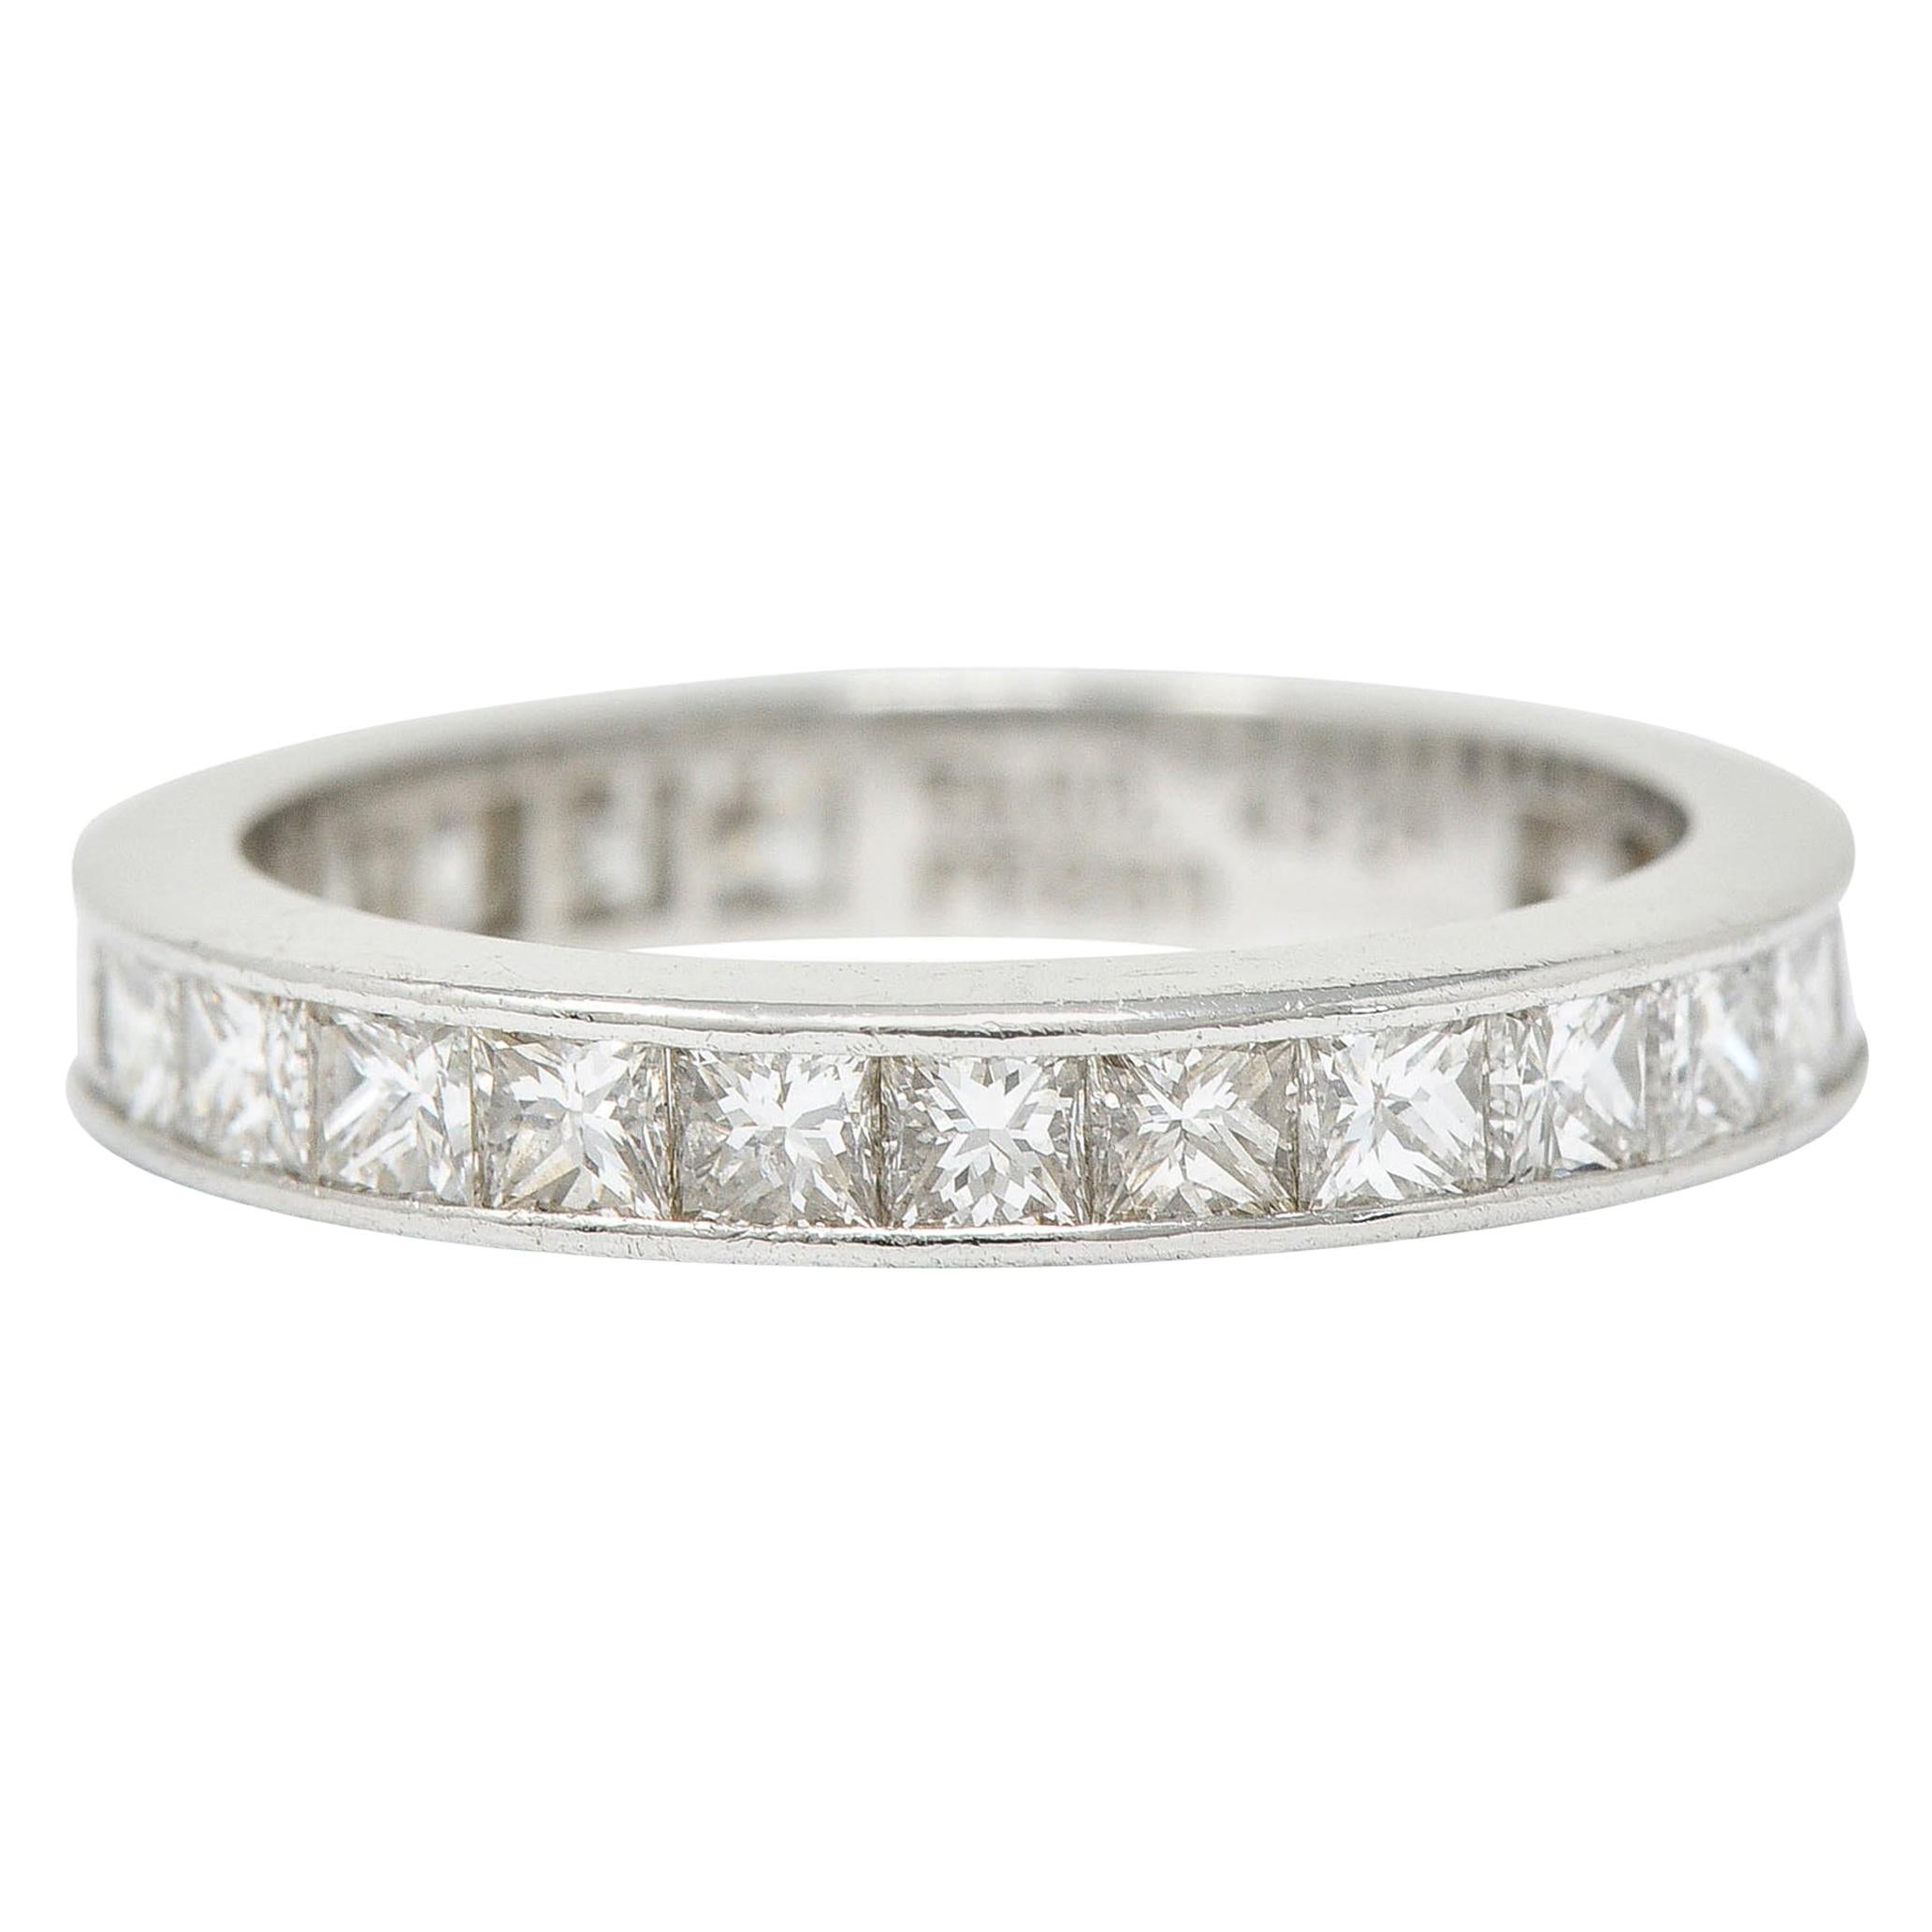 Tiffany & Co. 1.55 Carats Diamond Platinum Eternity Band Ring